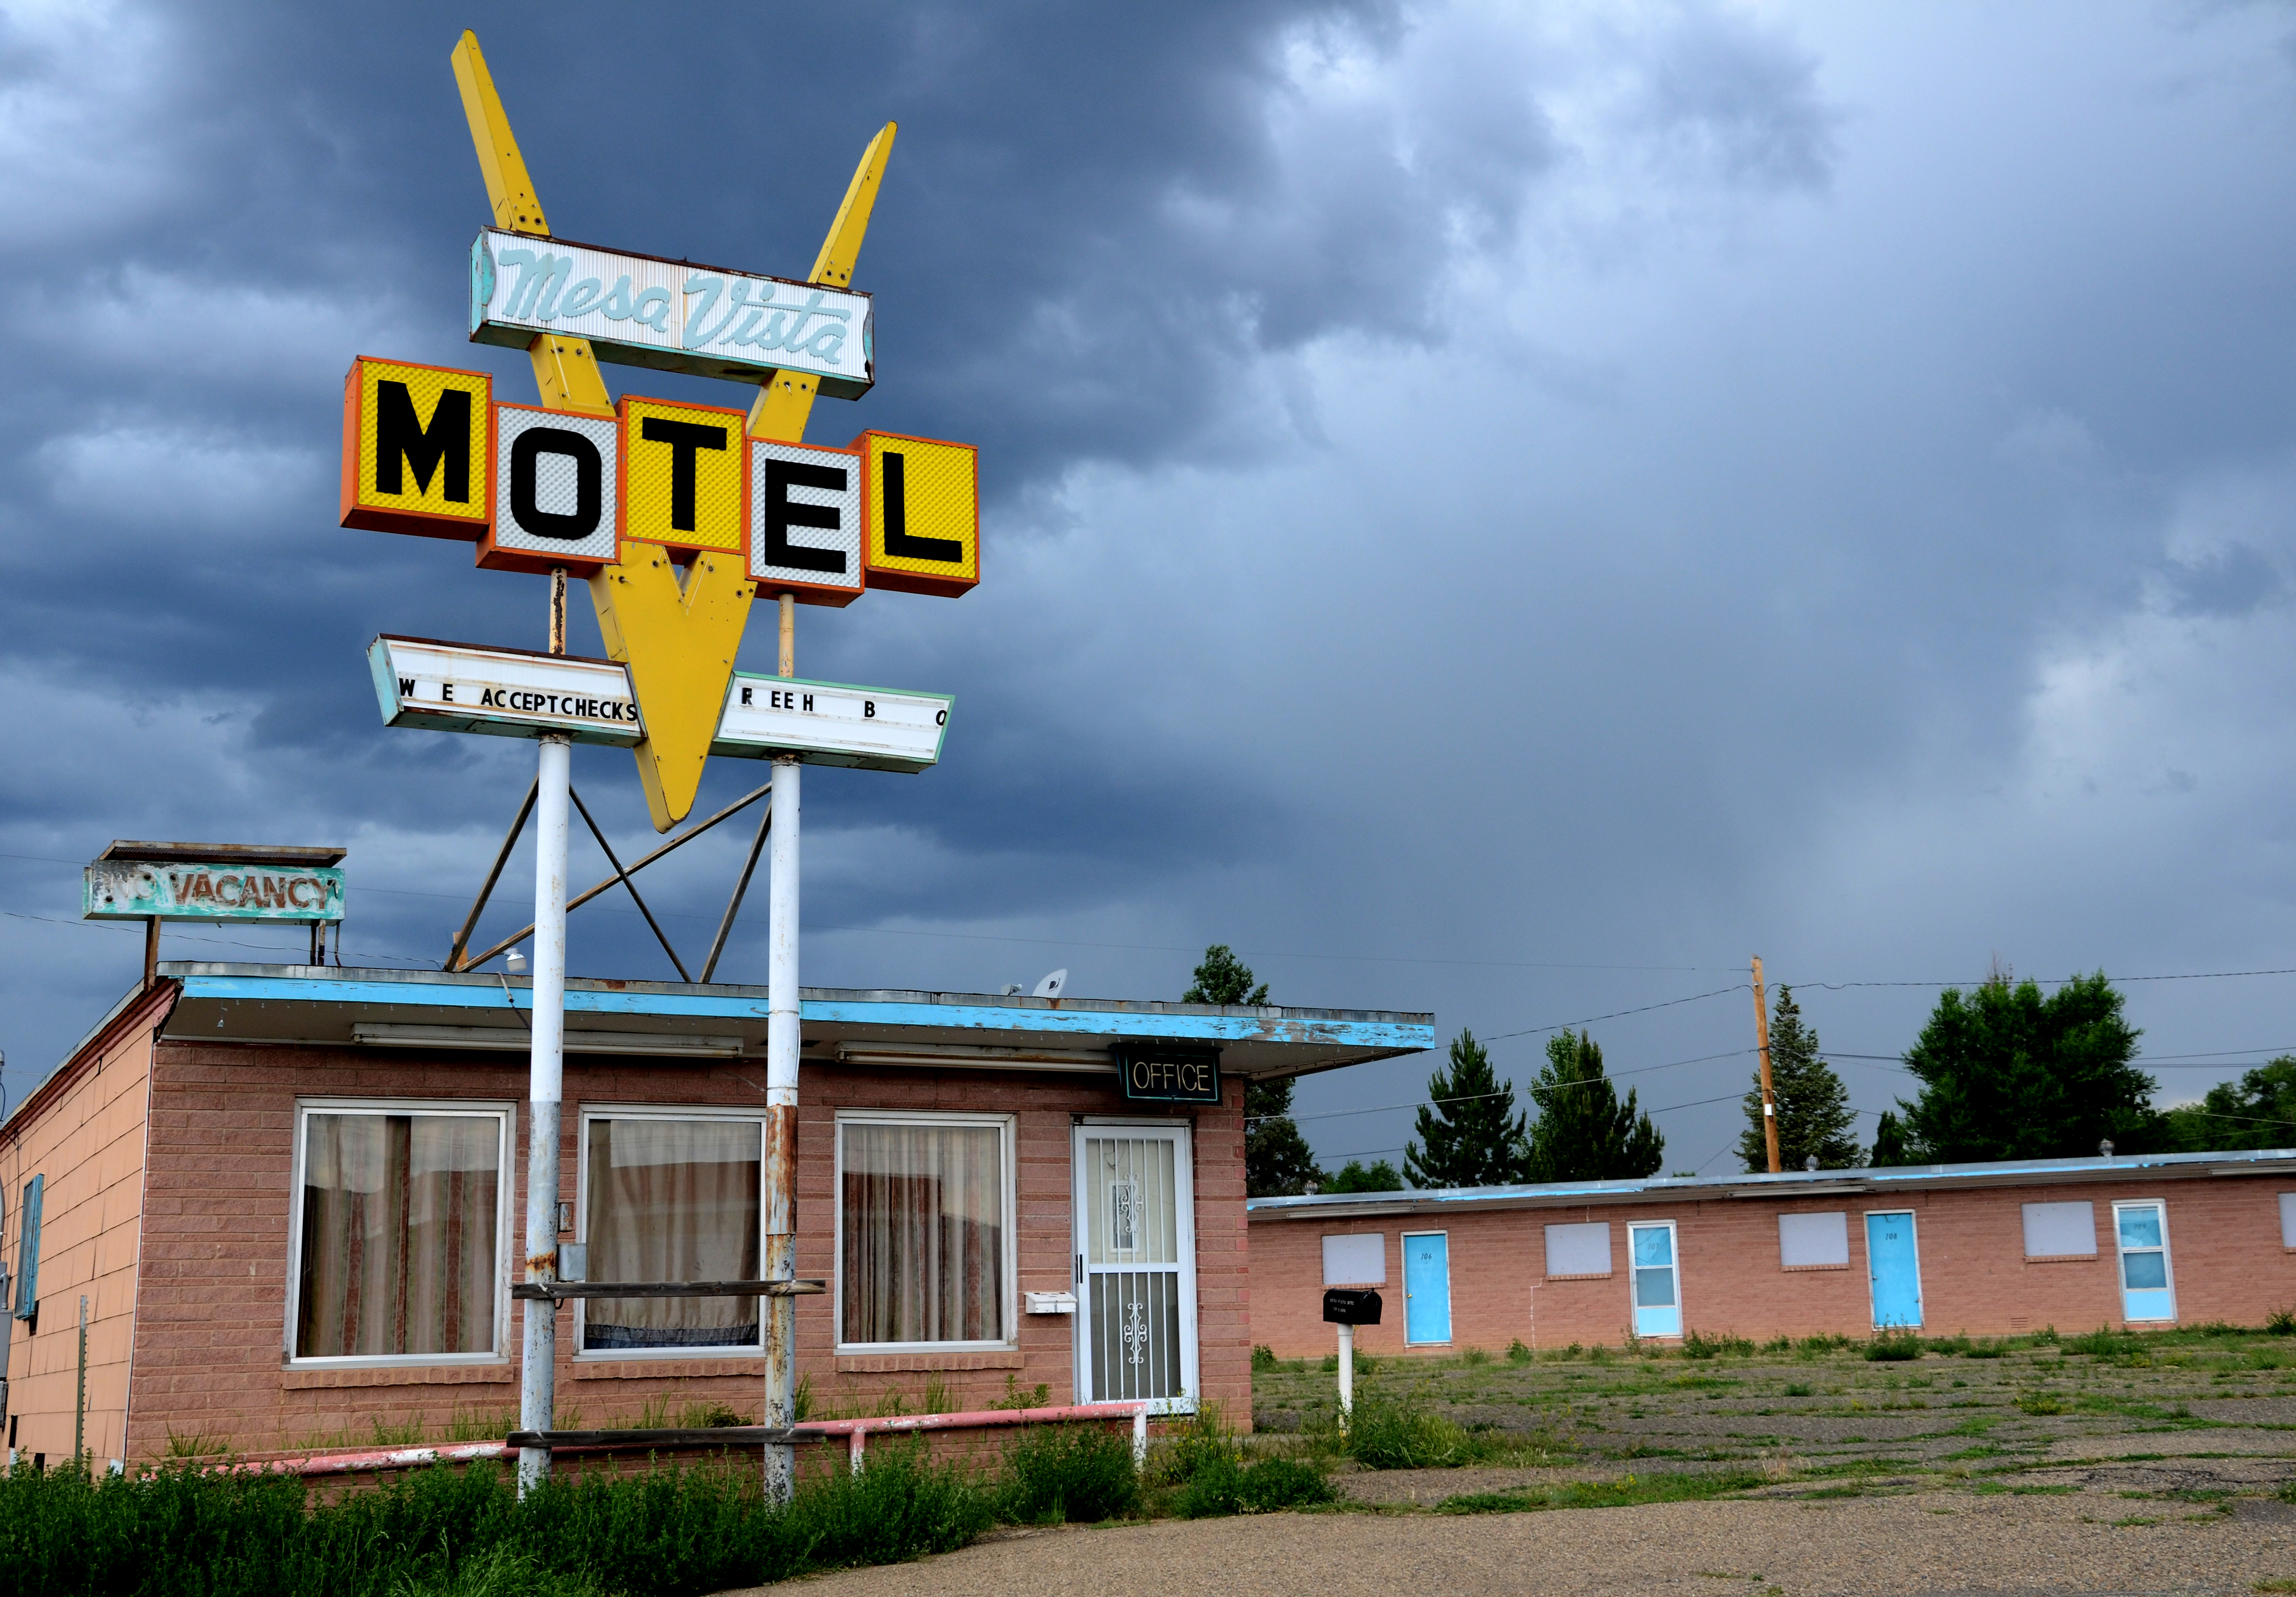 Mesa Vista Motel - Raton, New Mexico U.S.A. - June 28, 2016